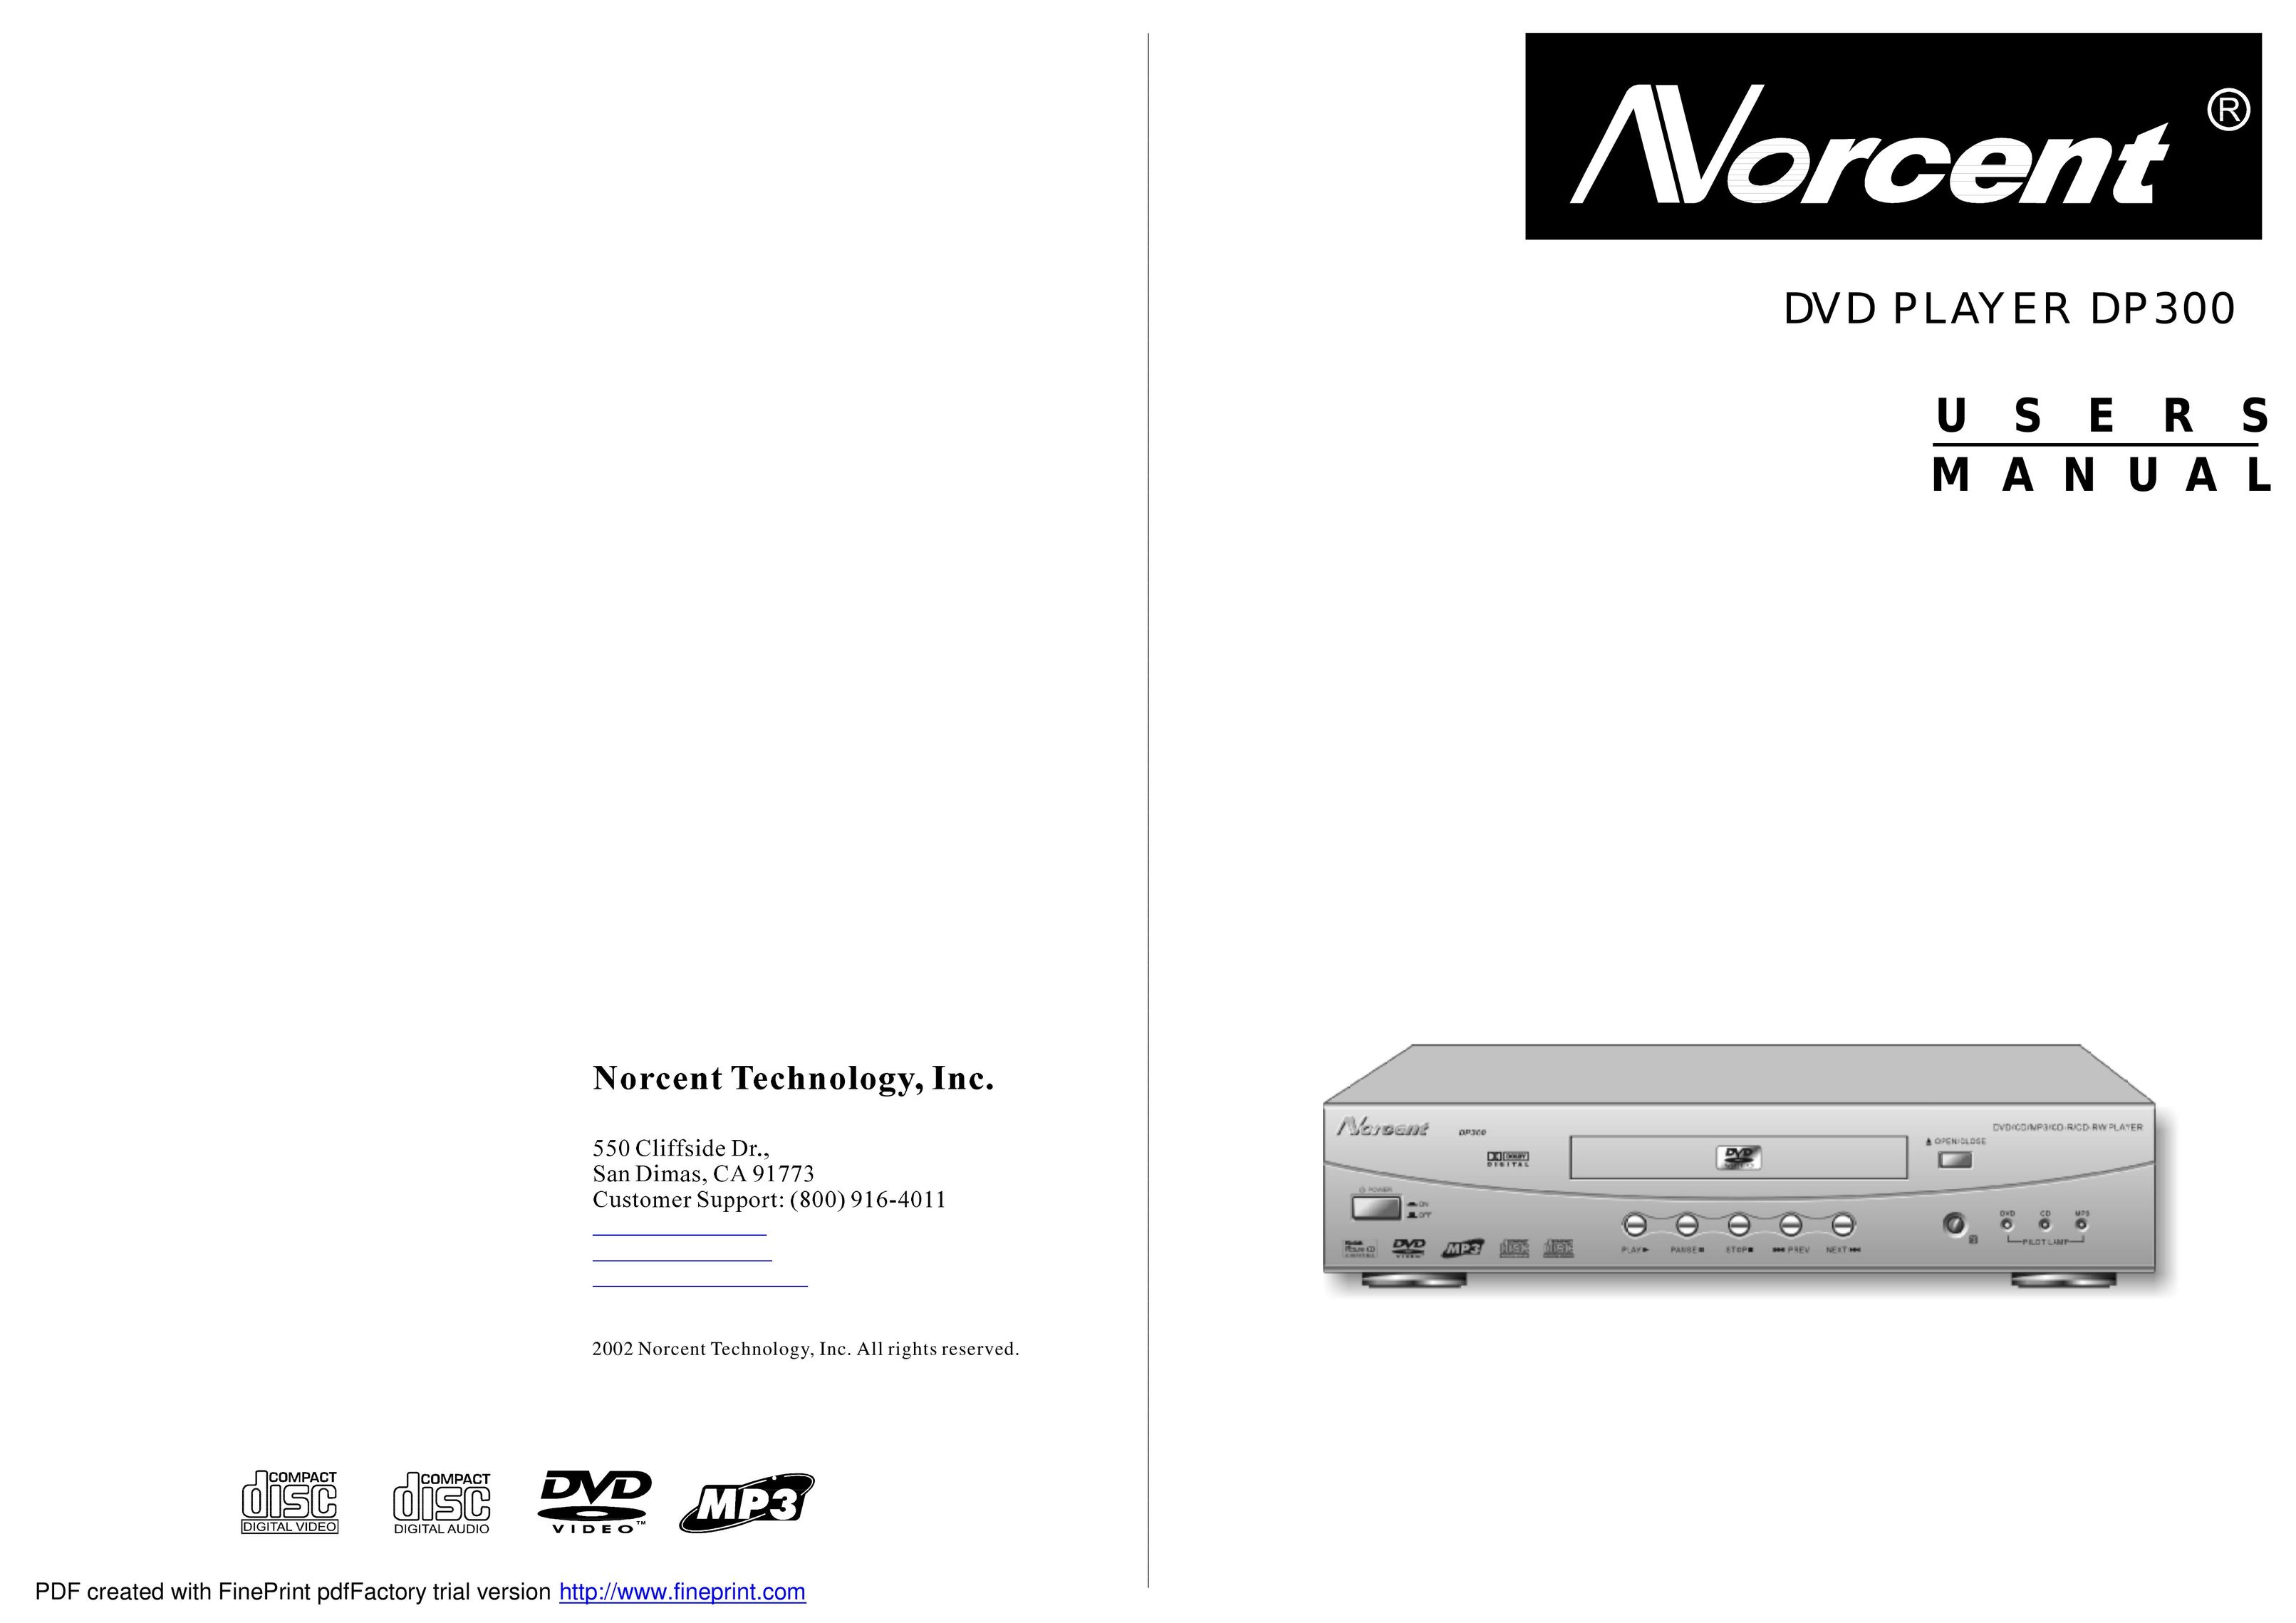 Norcent Technologies DP300 DVD Player User Manual